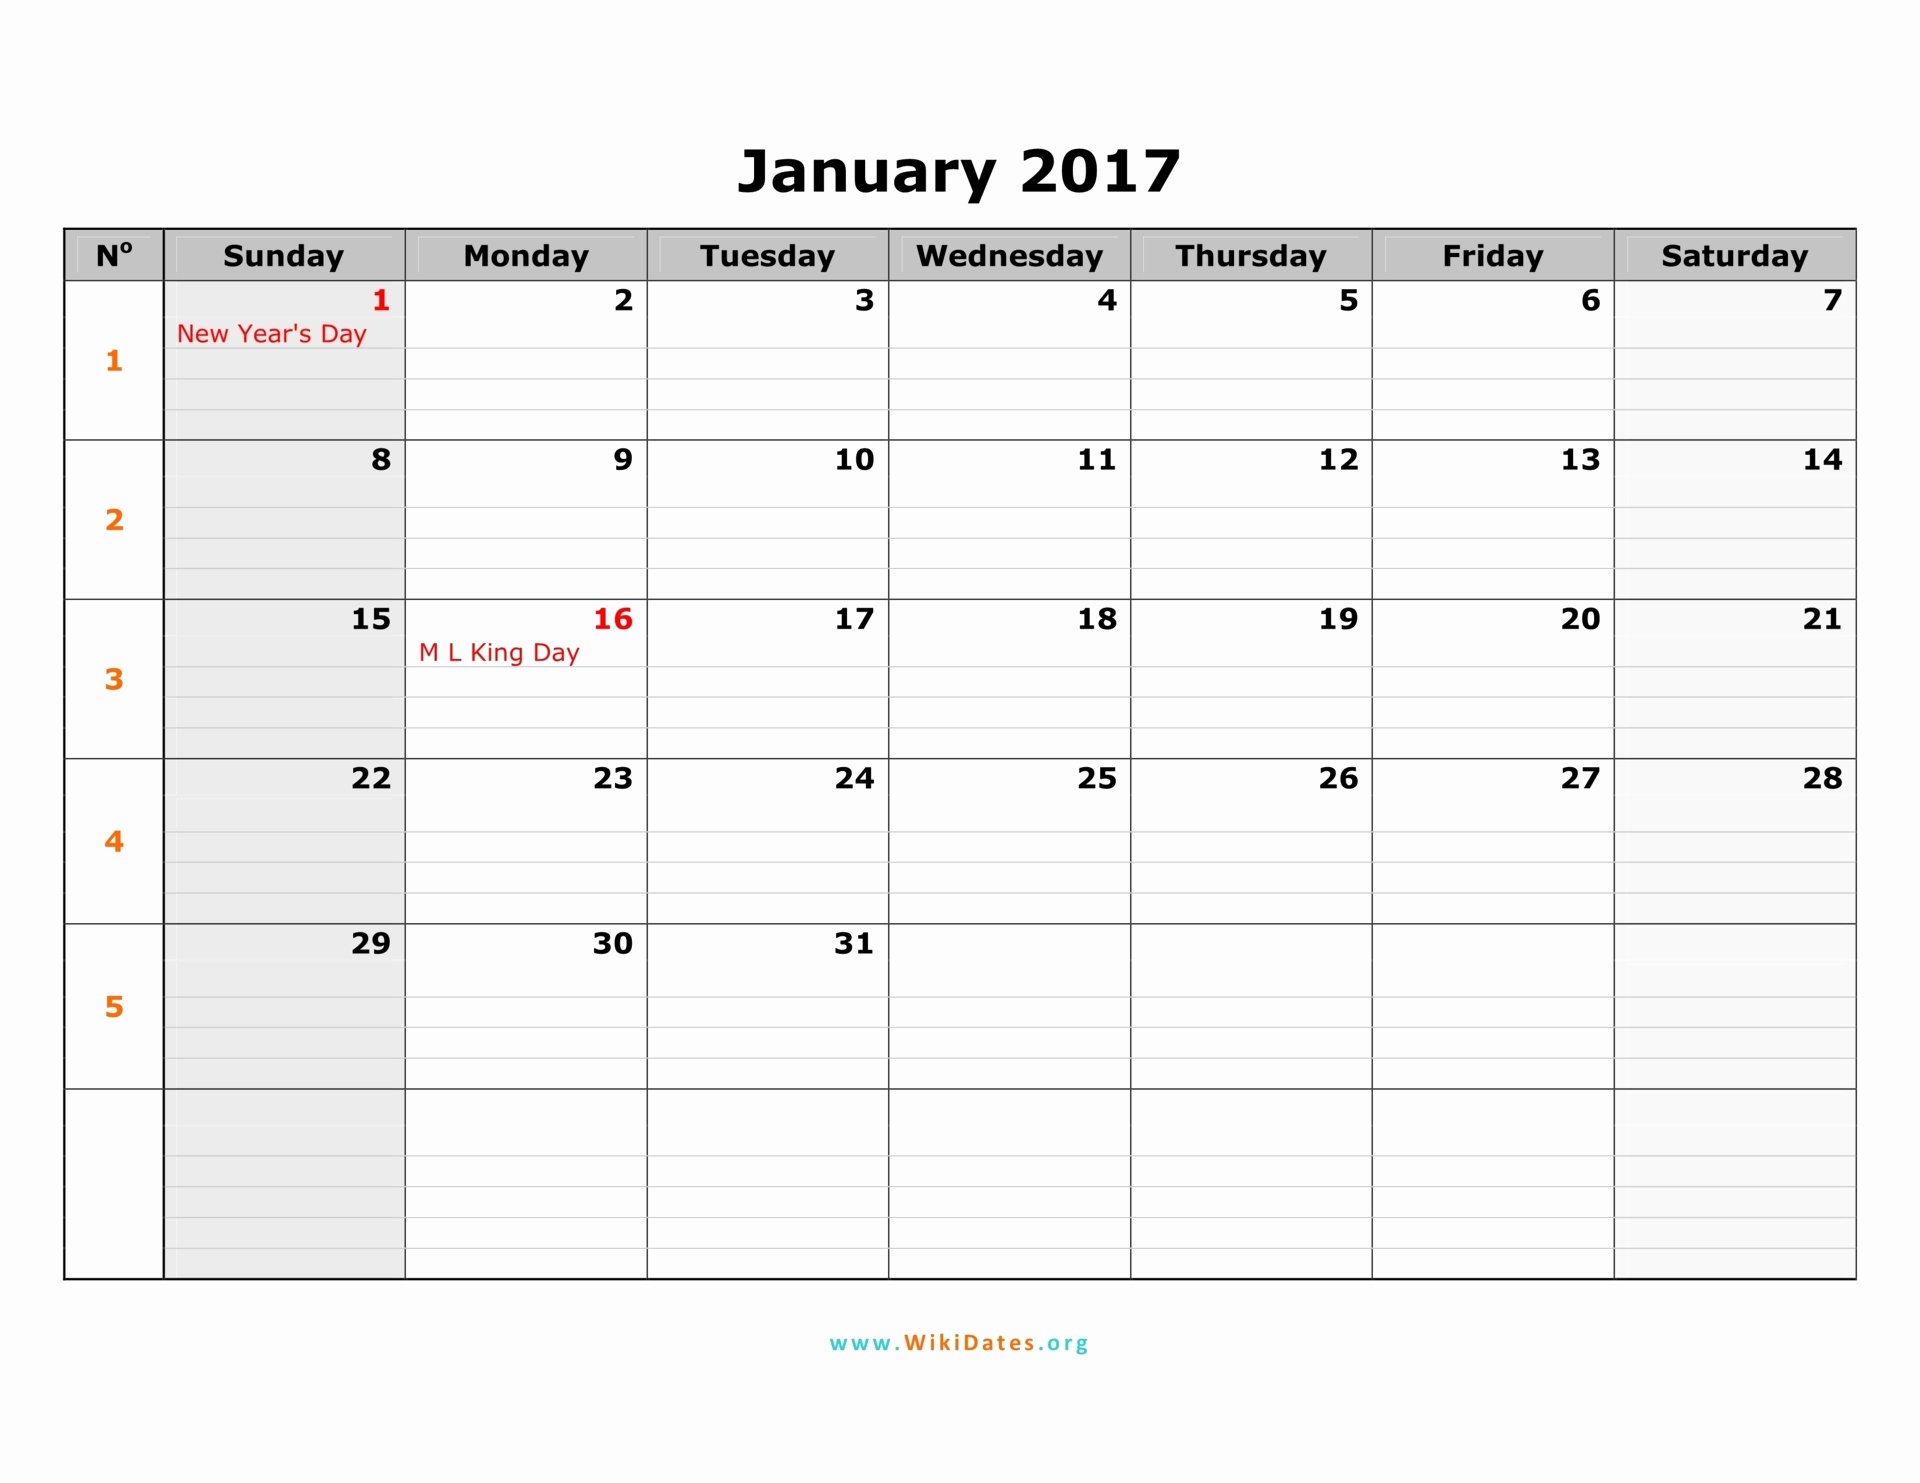 2017 Monthly Calendar Template